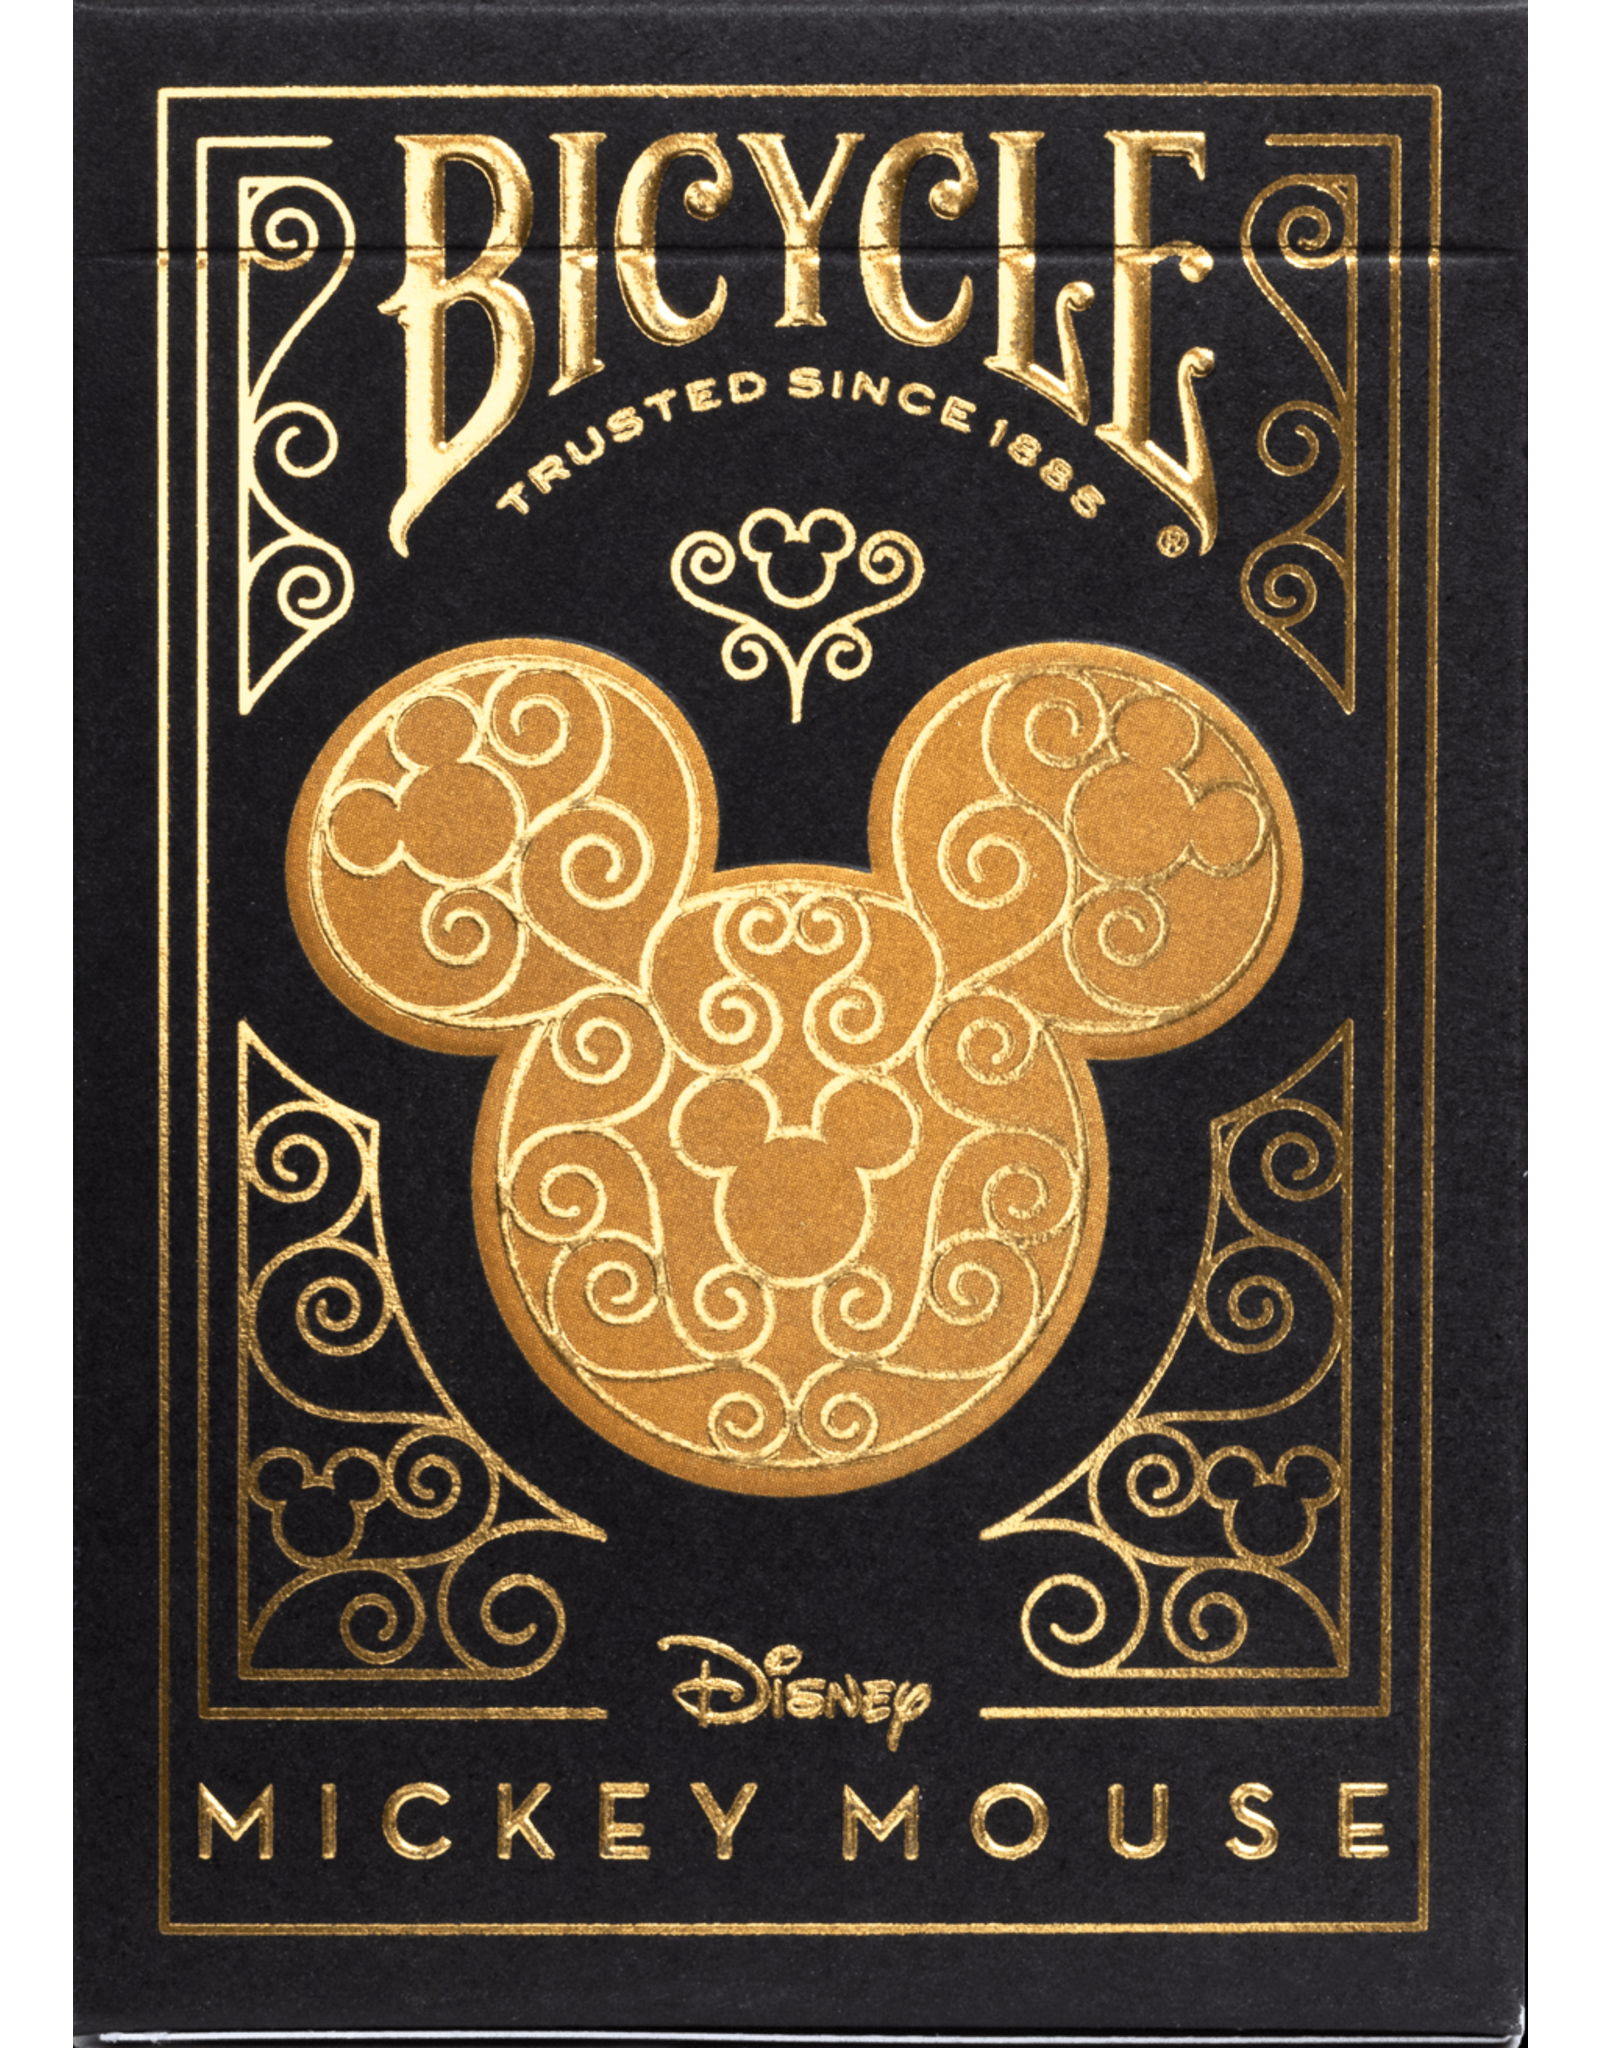 Bicycle Bicycle Playing Cards: Disney